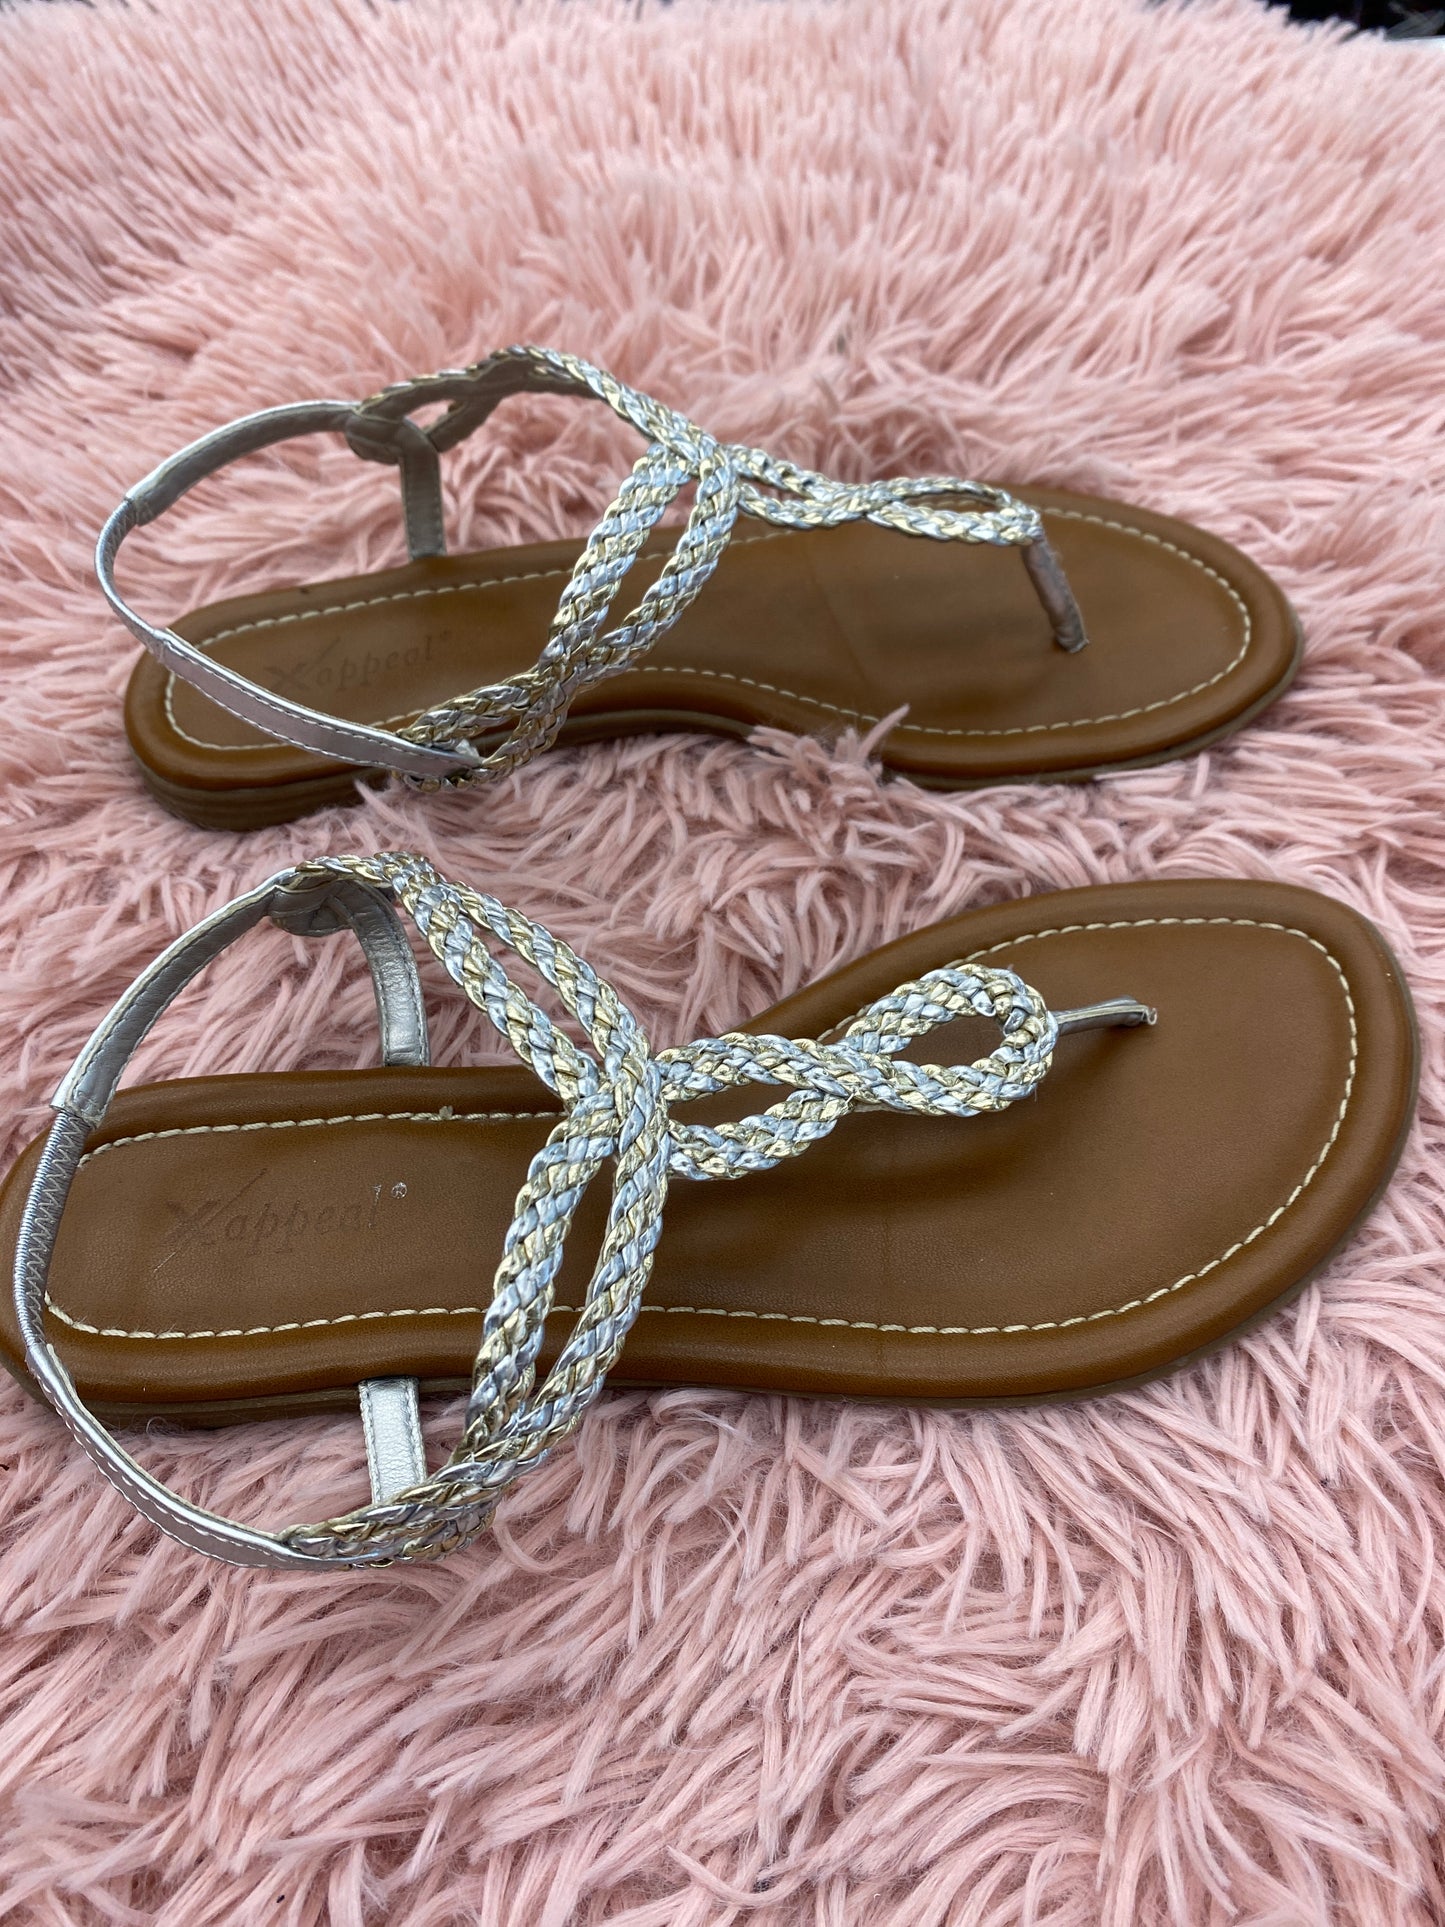 Sandals Flip Flops By Xappeal  Size: 7